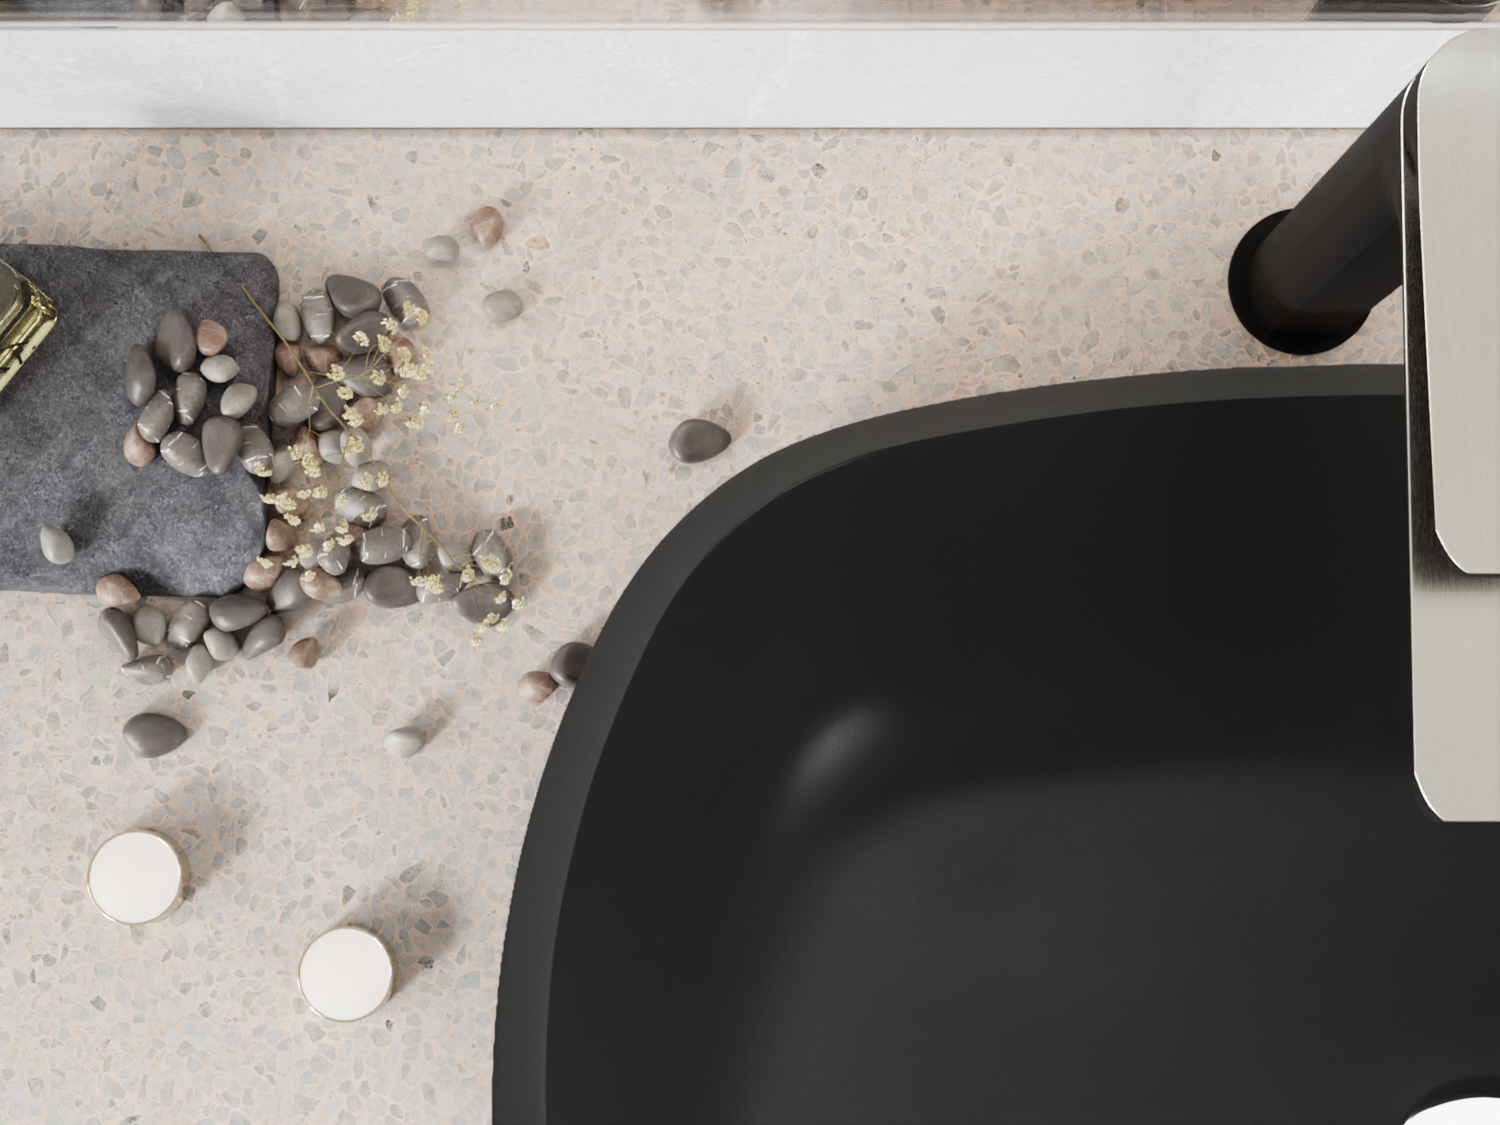 best sink vanity units Anzzi BATHROOM - Sinks - Vessel - Tempered Glass Black